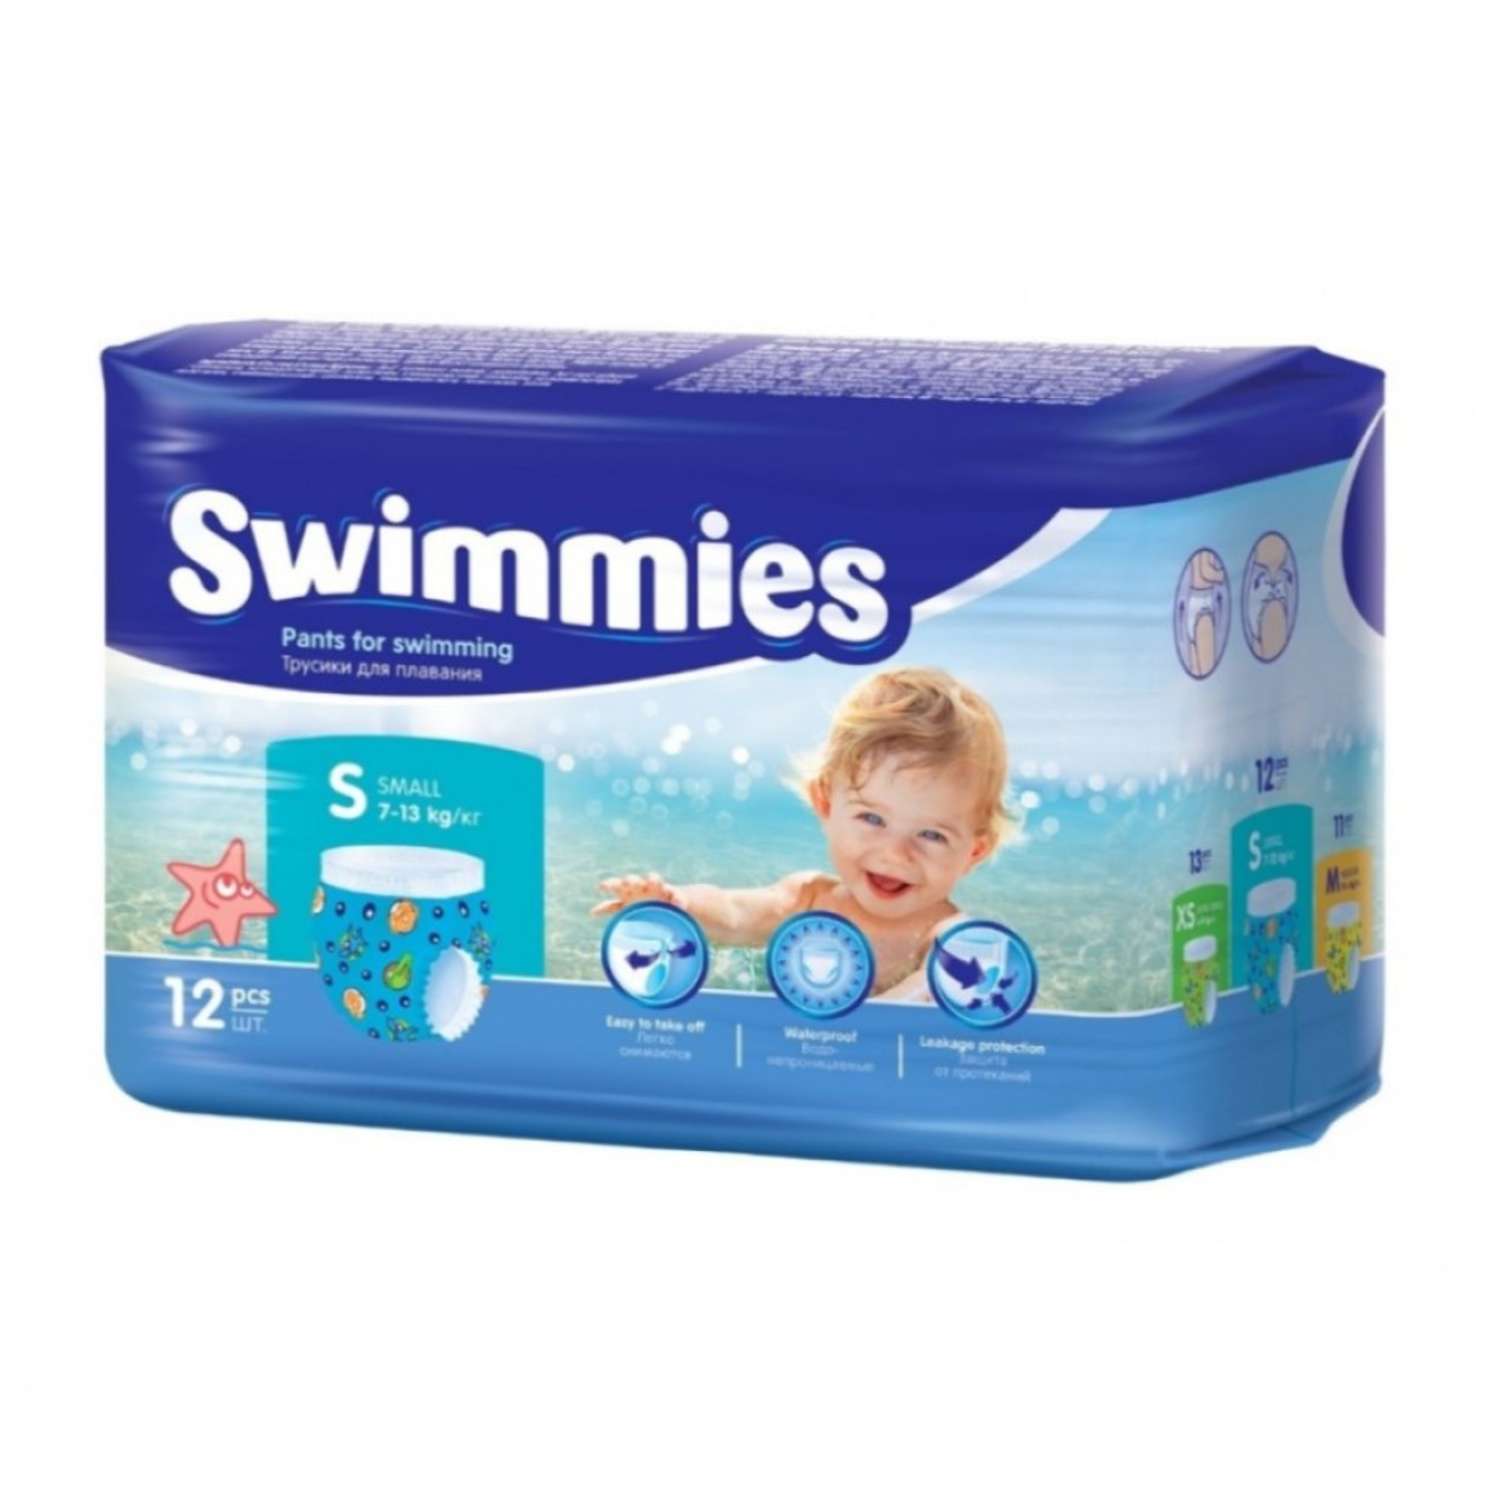 Детские трусики для плавания Helen Harper Swimmies Small 7-13 кг 12 шт - фото 1